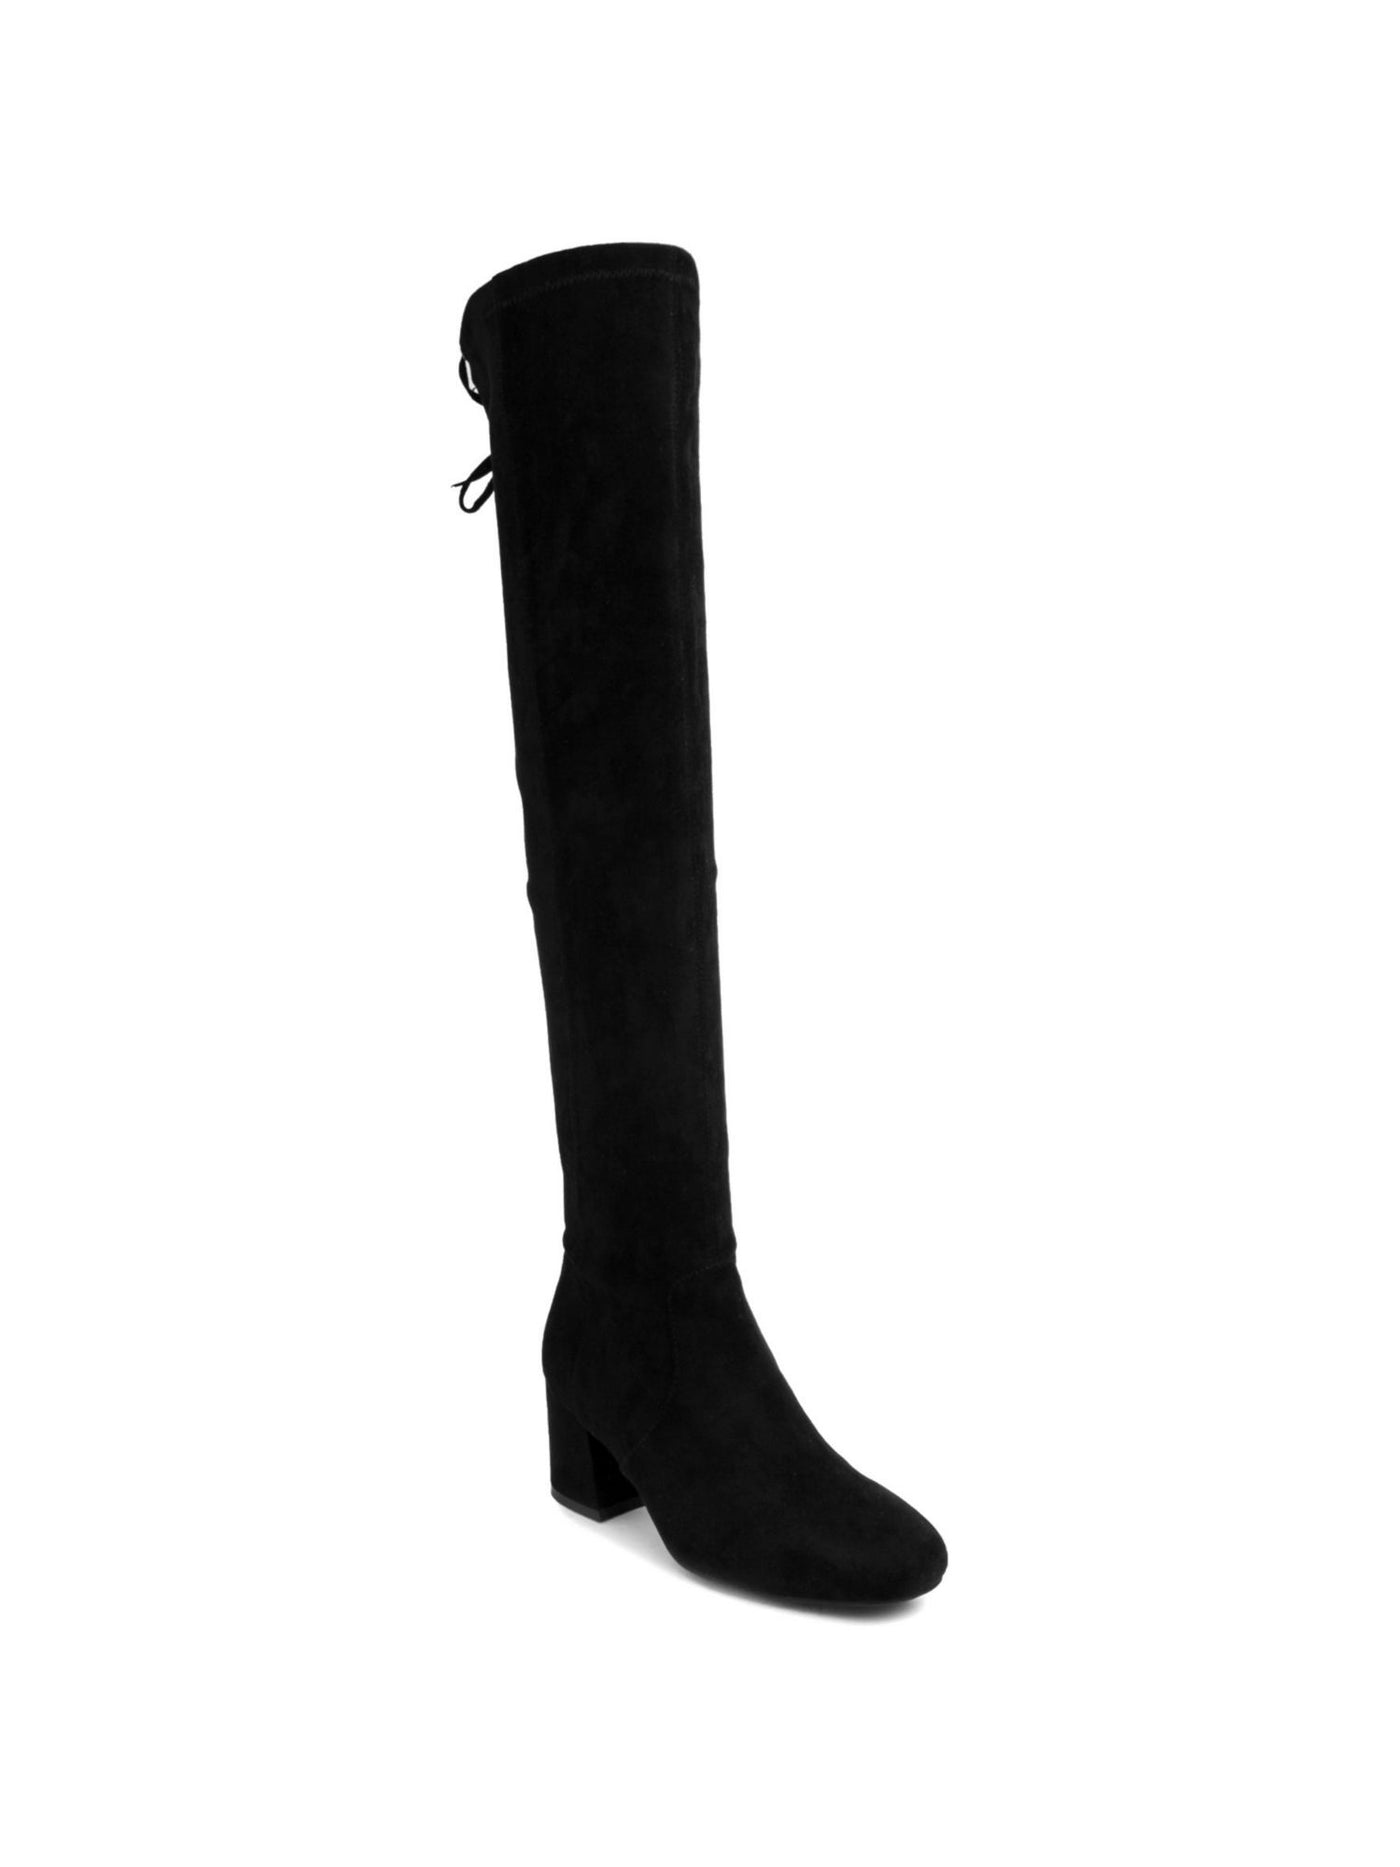 SUGAR Womens Black Zipper Accent Lace Ollie Almond Toe Dress Boots Shoes 10 M